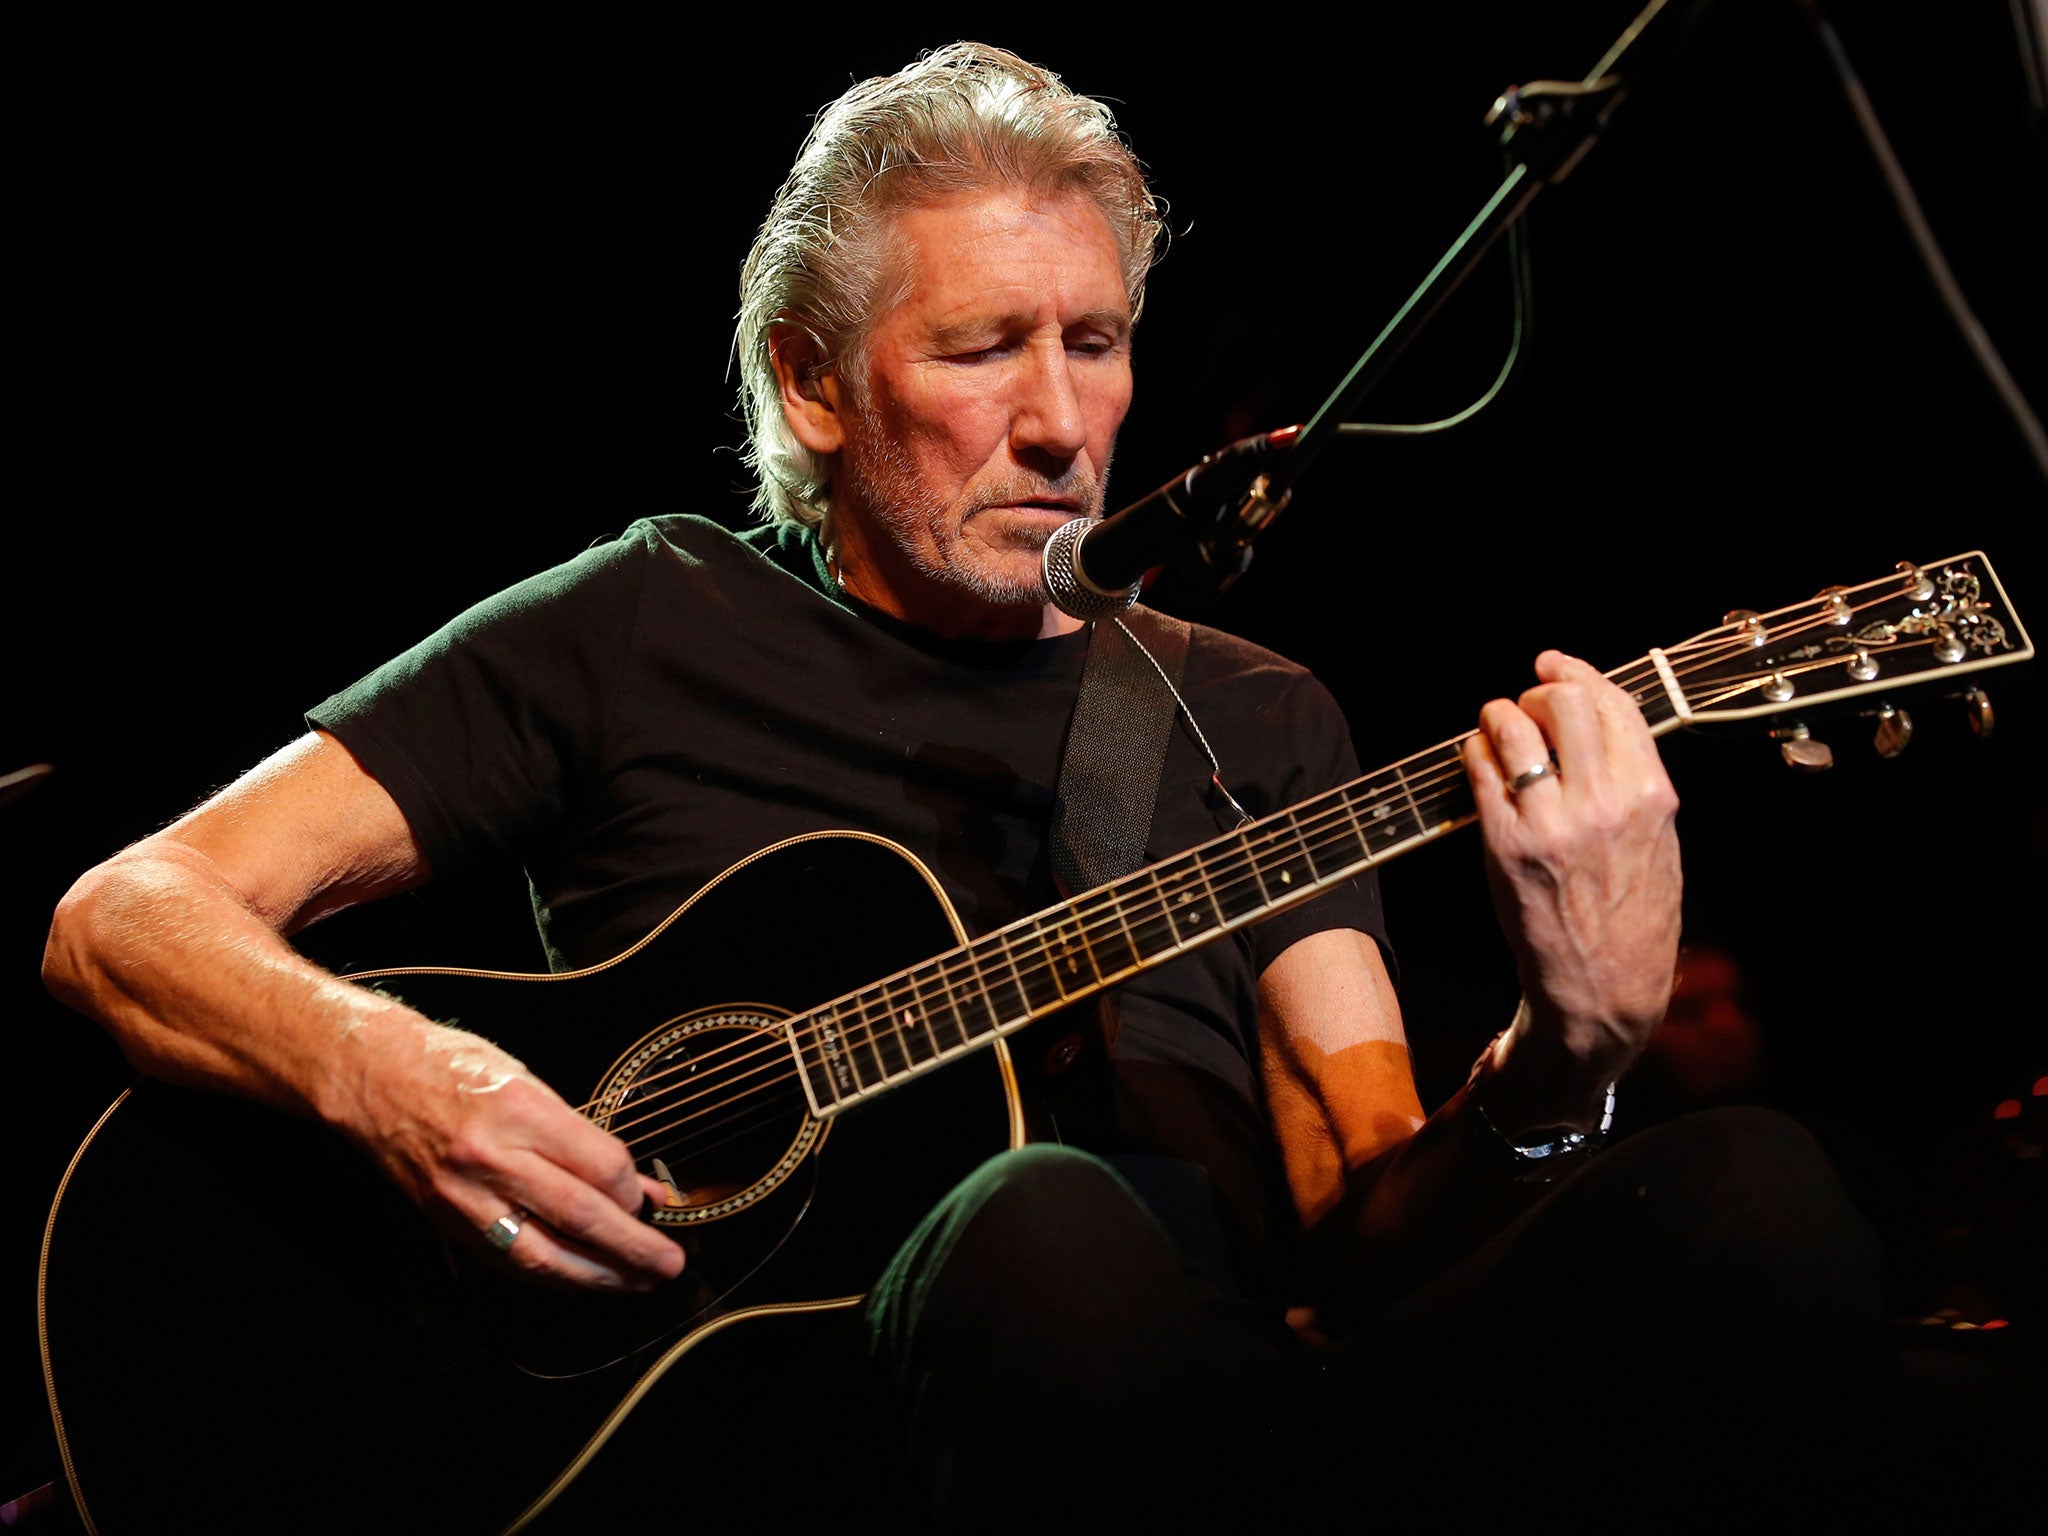 Roger Waters left Pink Floyd 29 years ago in 1985